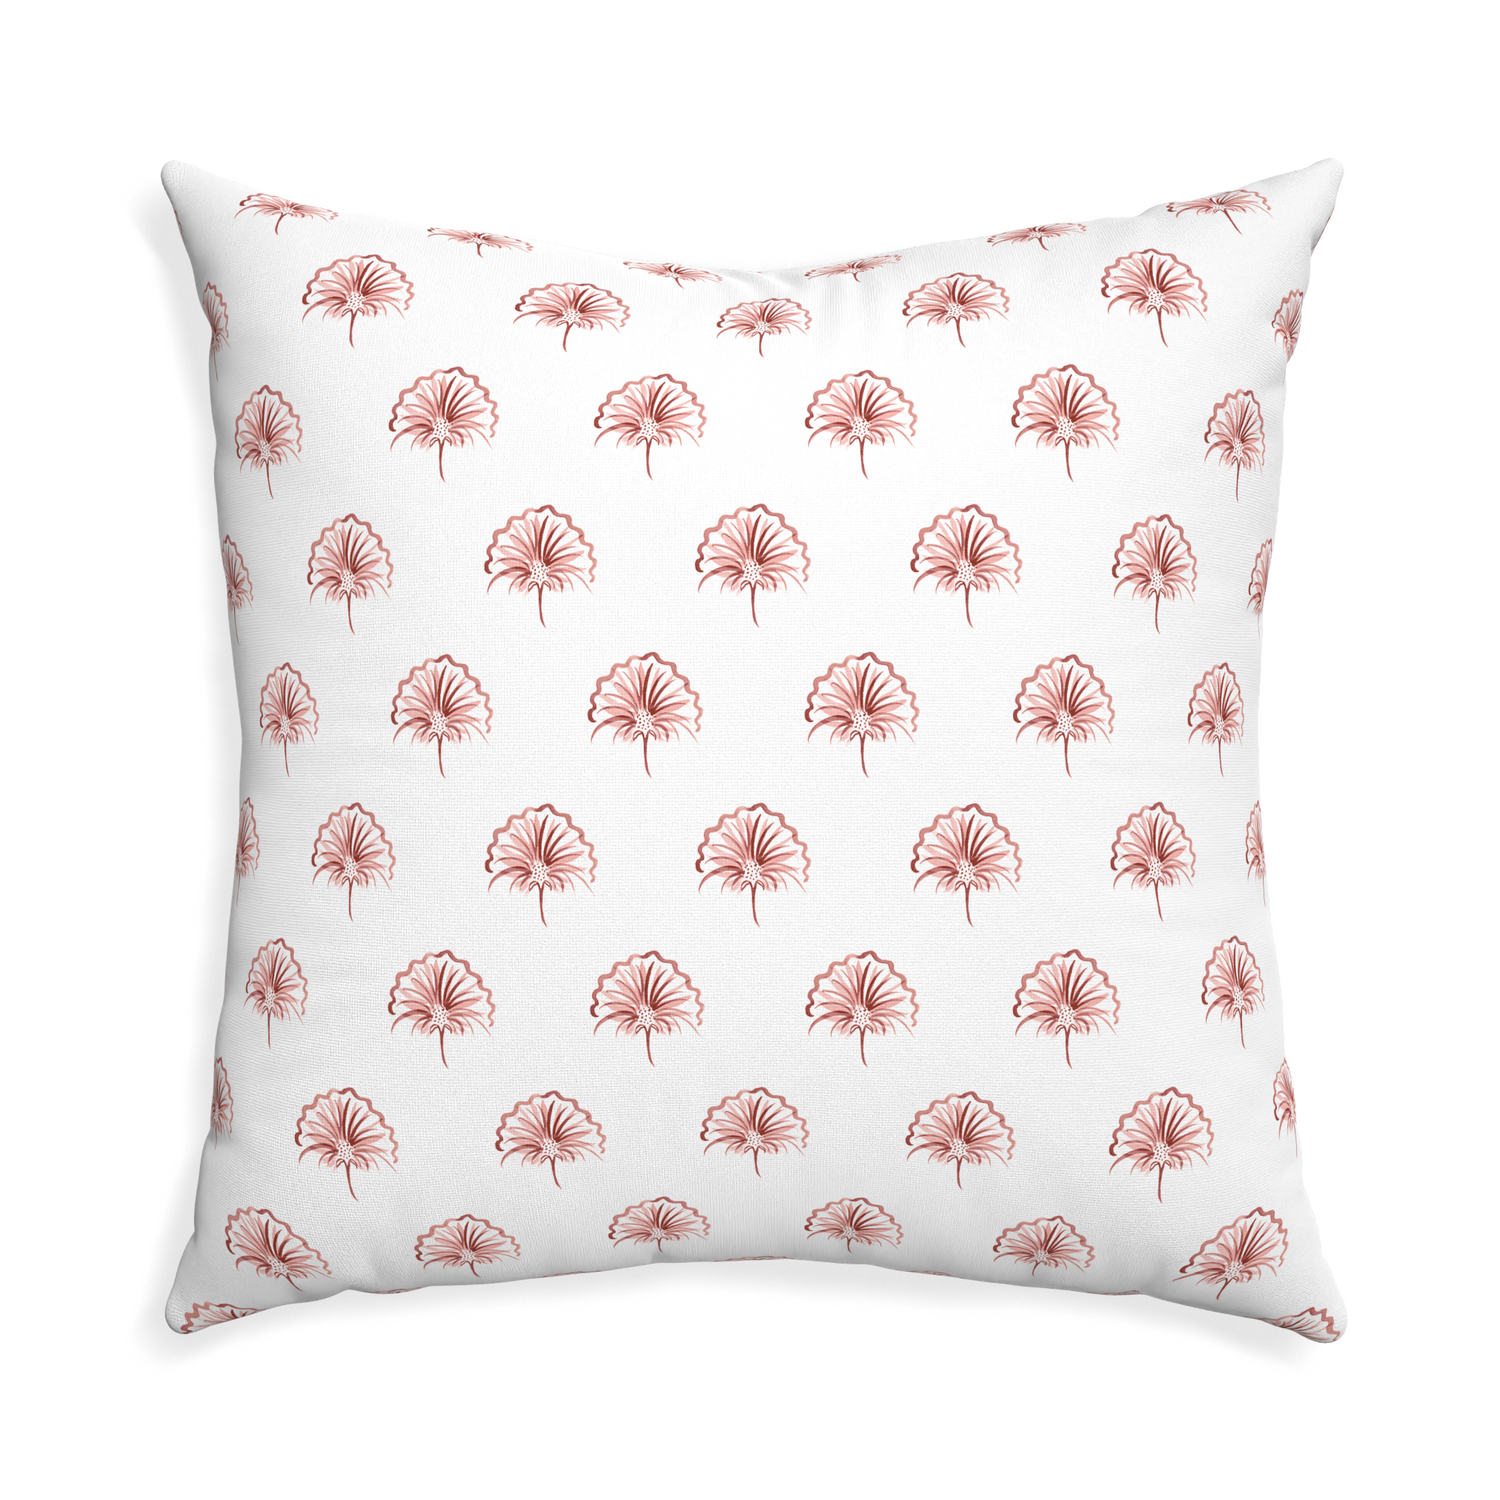 Euro-sham penelope rose custom pillow with none on white background